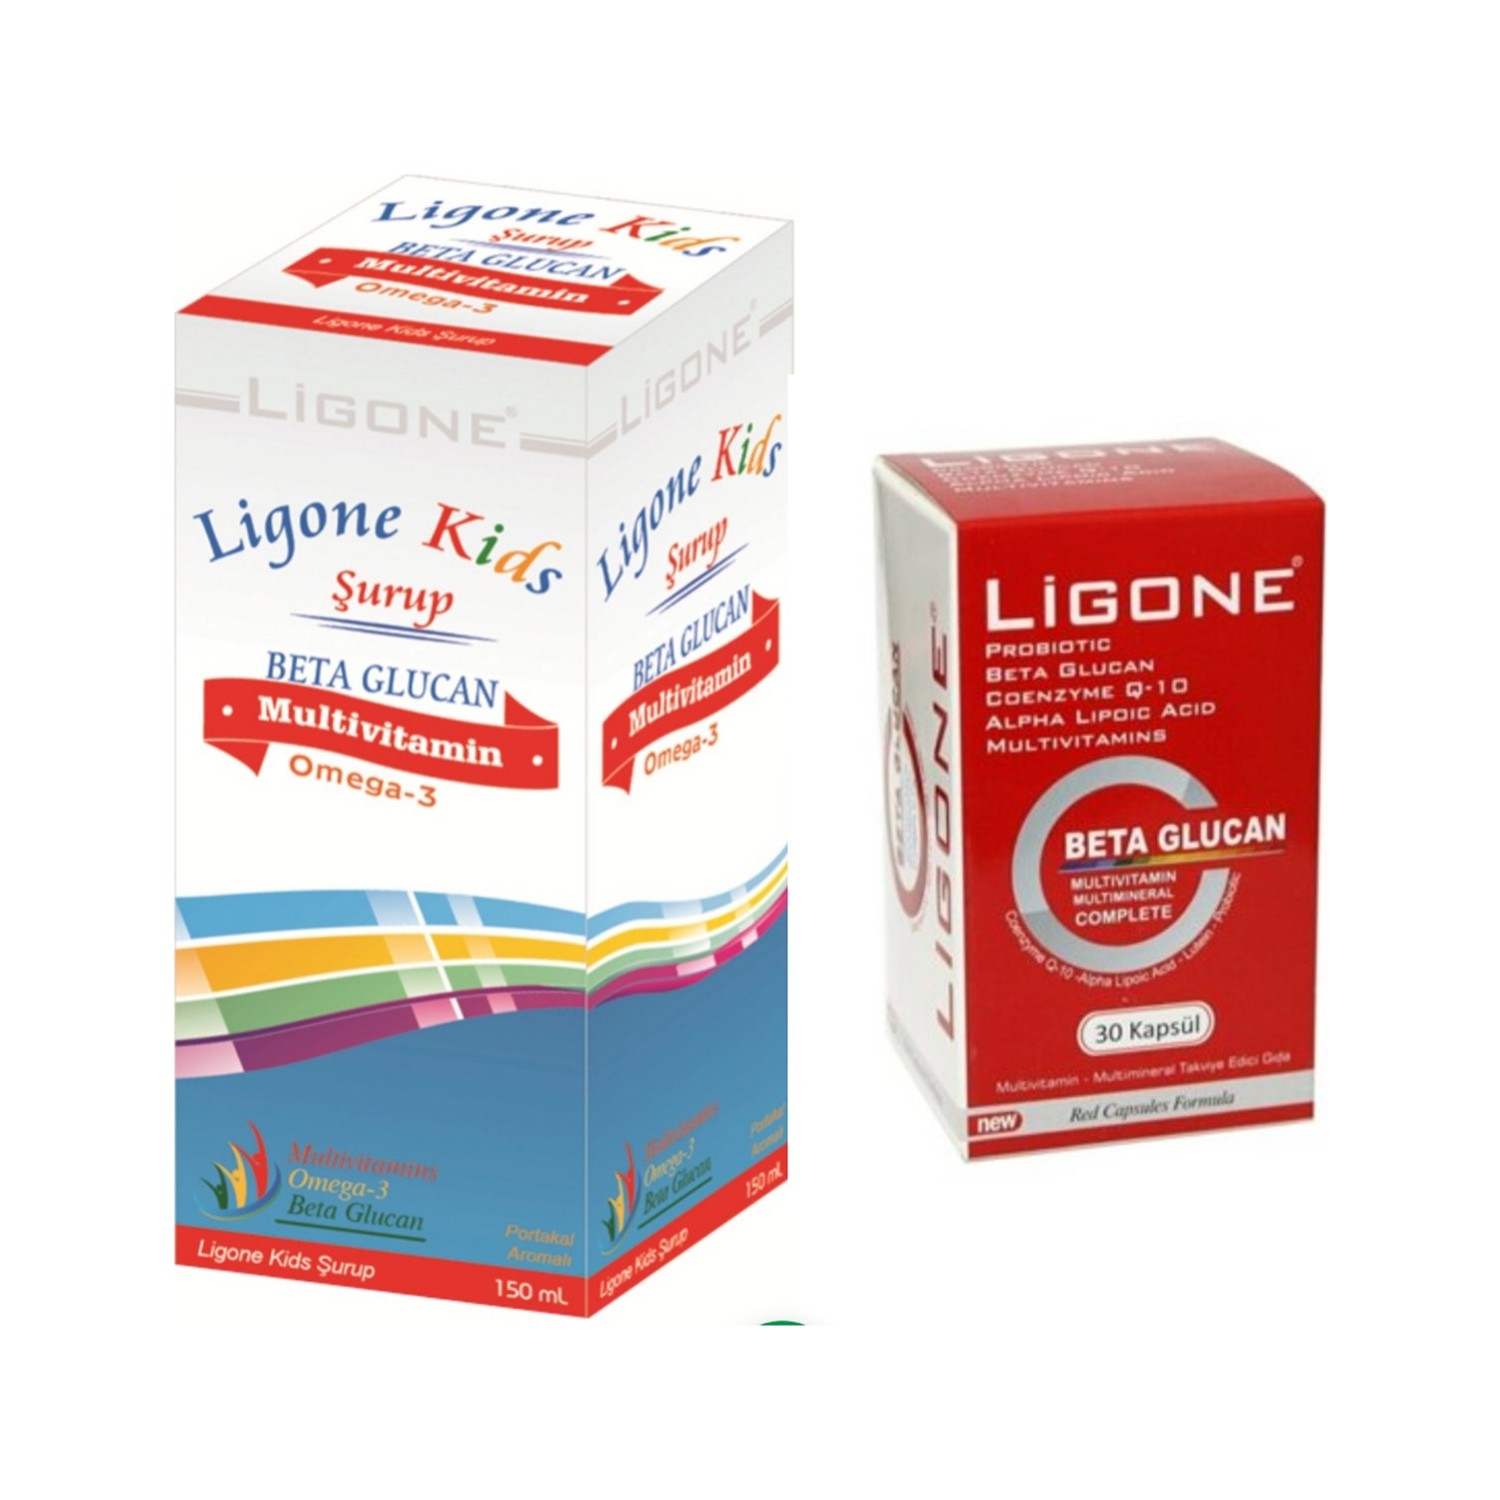 Мультивитаминный сироп Ligone Kids, 150 мл + бета глюкан Ligone, 30 капсул пищевая добавка newdrog ligone beta glucan 30 капсул мультивитаминный сироп ligone kids 150 мл